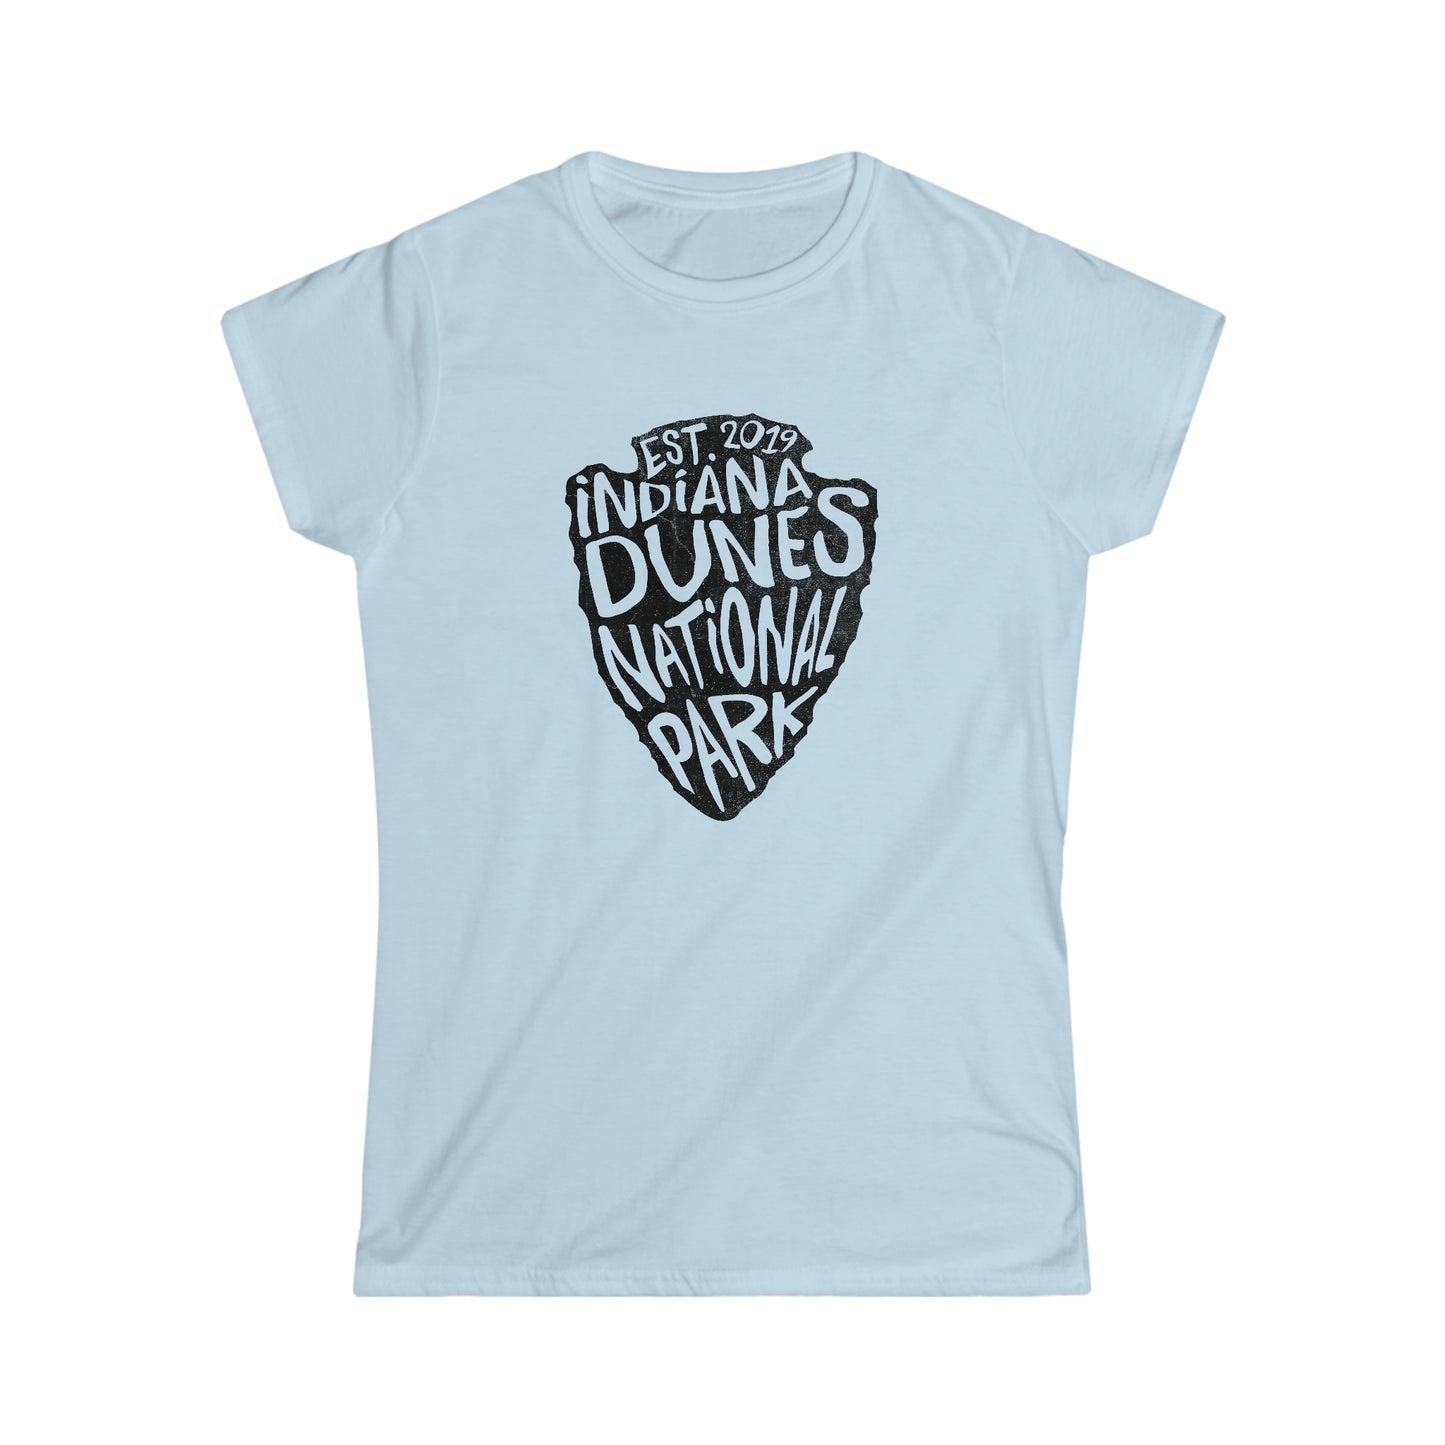 Indiana Dunes National Park Women's T-Shirt - Arrowhead Design